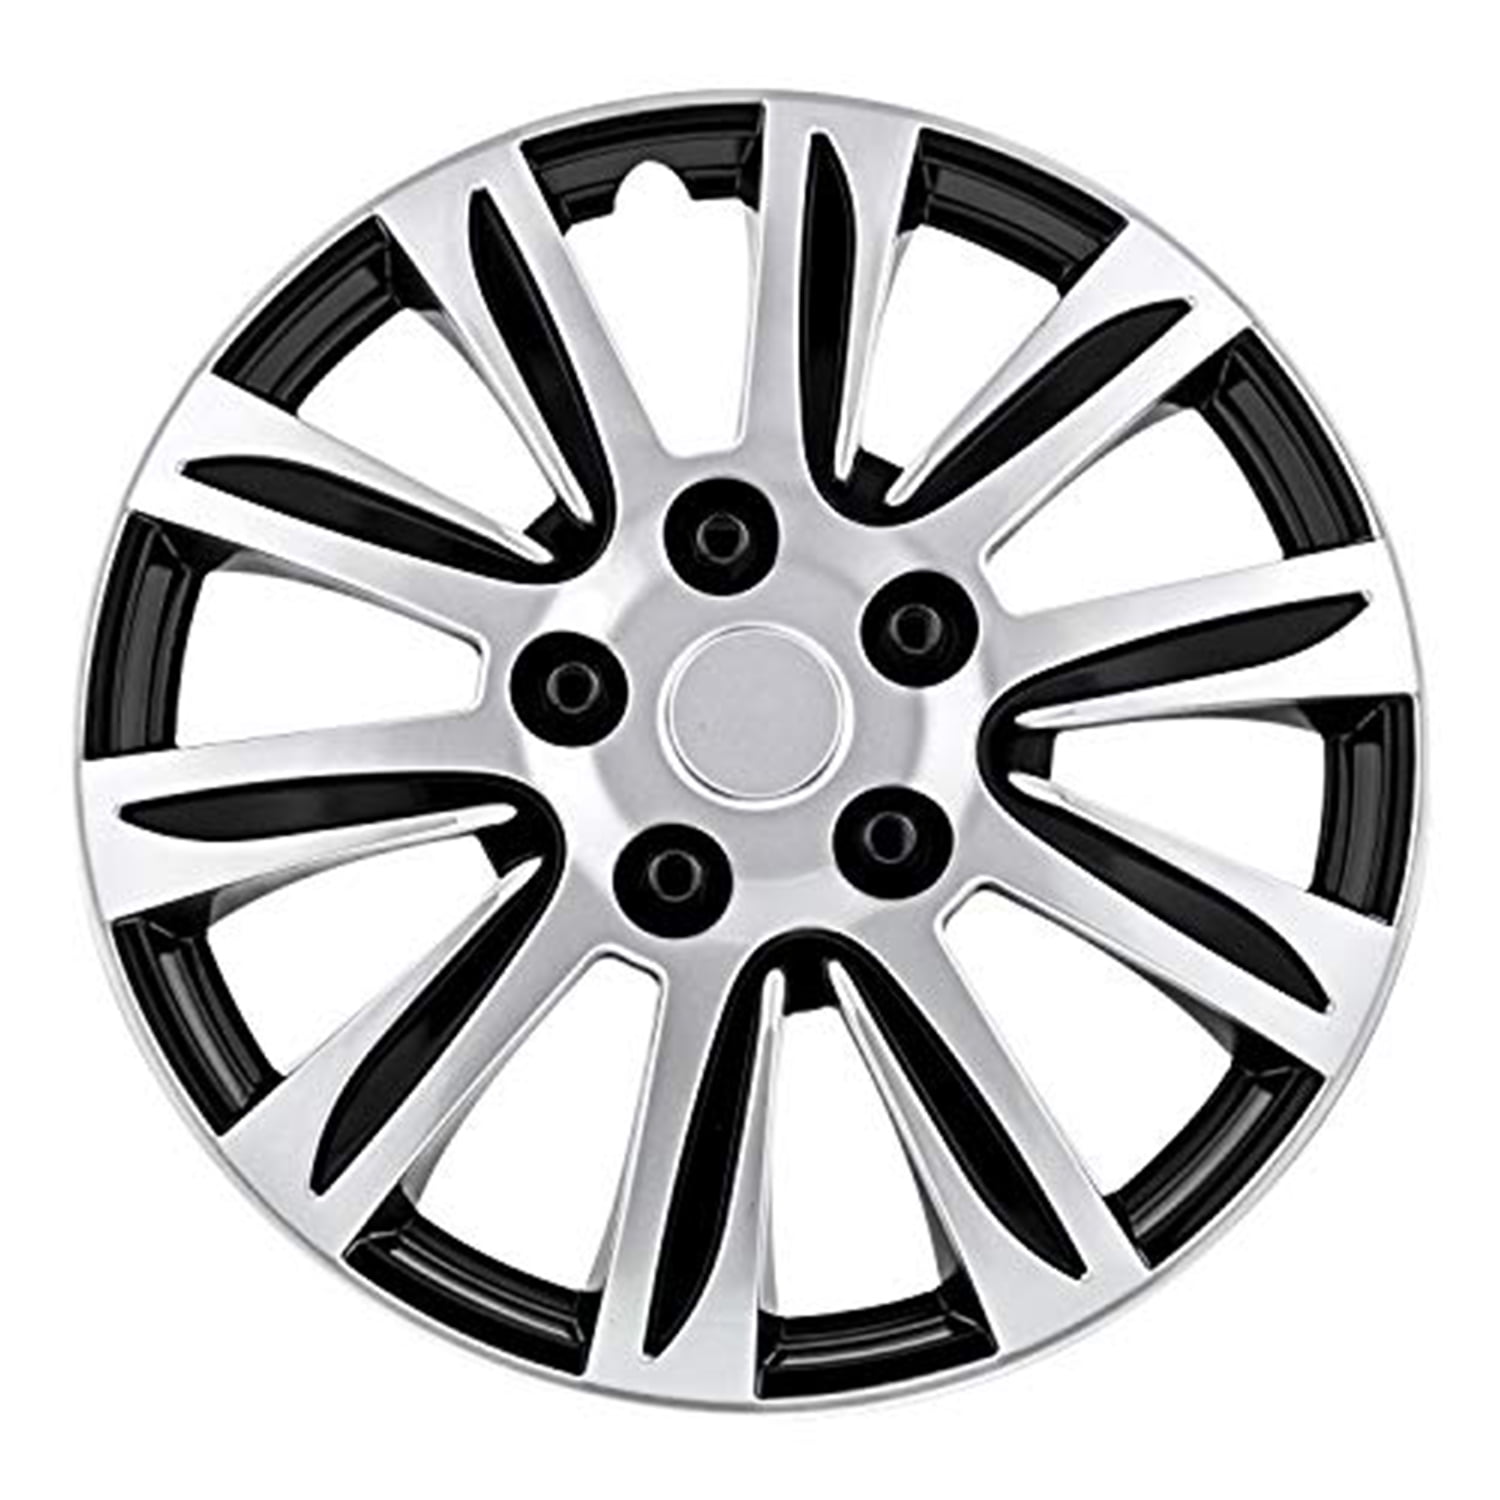 Details about   4 New Matte Black 15" Hubcaps Fits Subaru Suv Car Steel Wheel Covers Set Hubcap 